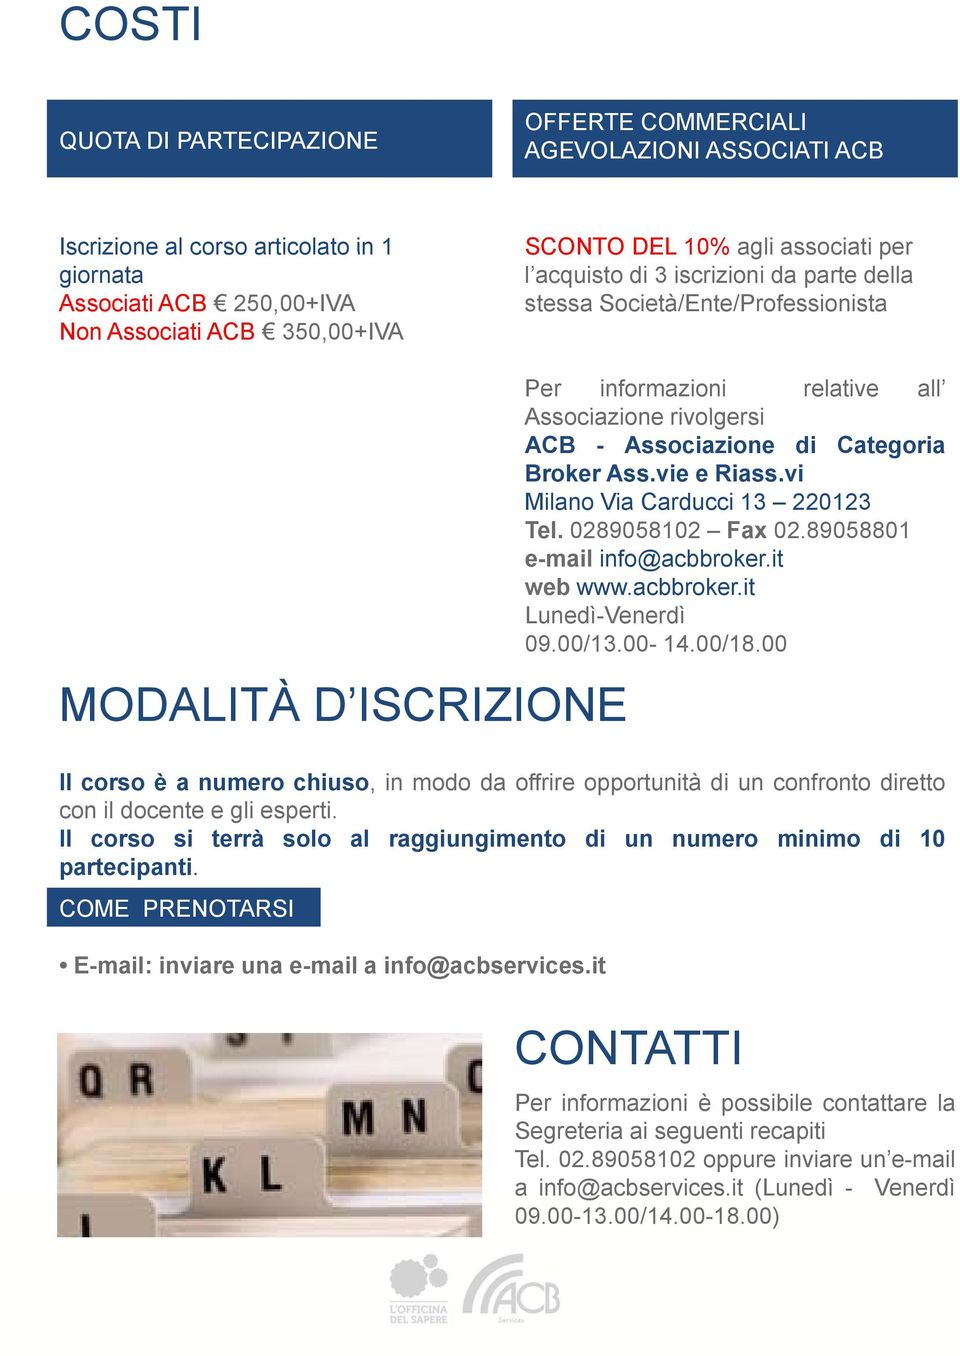 Categoria Broker Ass.vie e Riass.vi Milano Via Carducci 13 220123 Tel. 0289058102 Fax 02.89058801 e-mail info@acbbroker.it web www.acbbroker.it Lunedì-Venerdì 09.00/13.00-14.00/18.